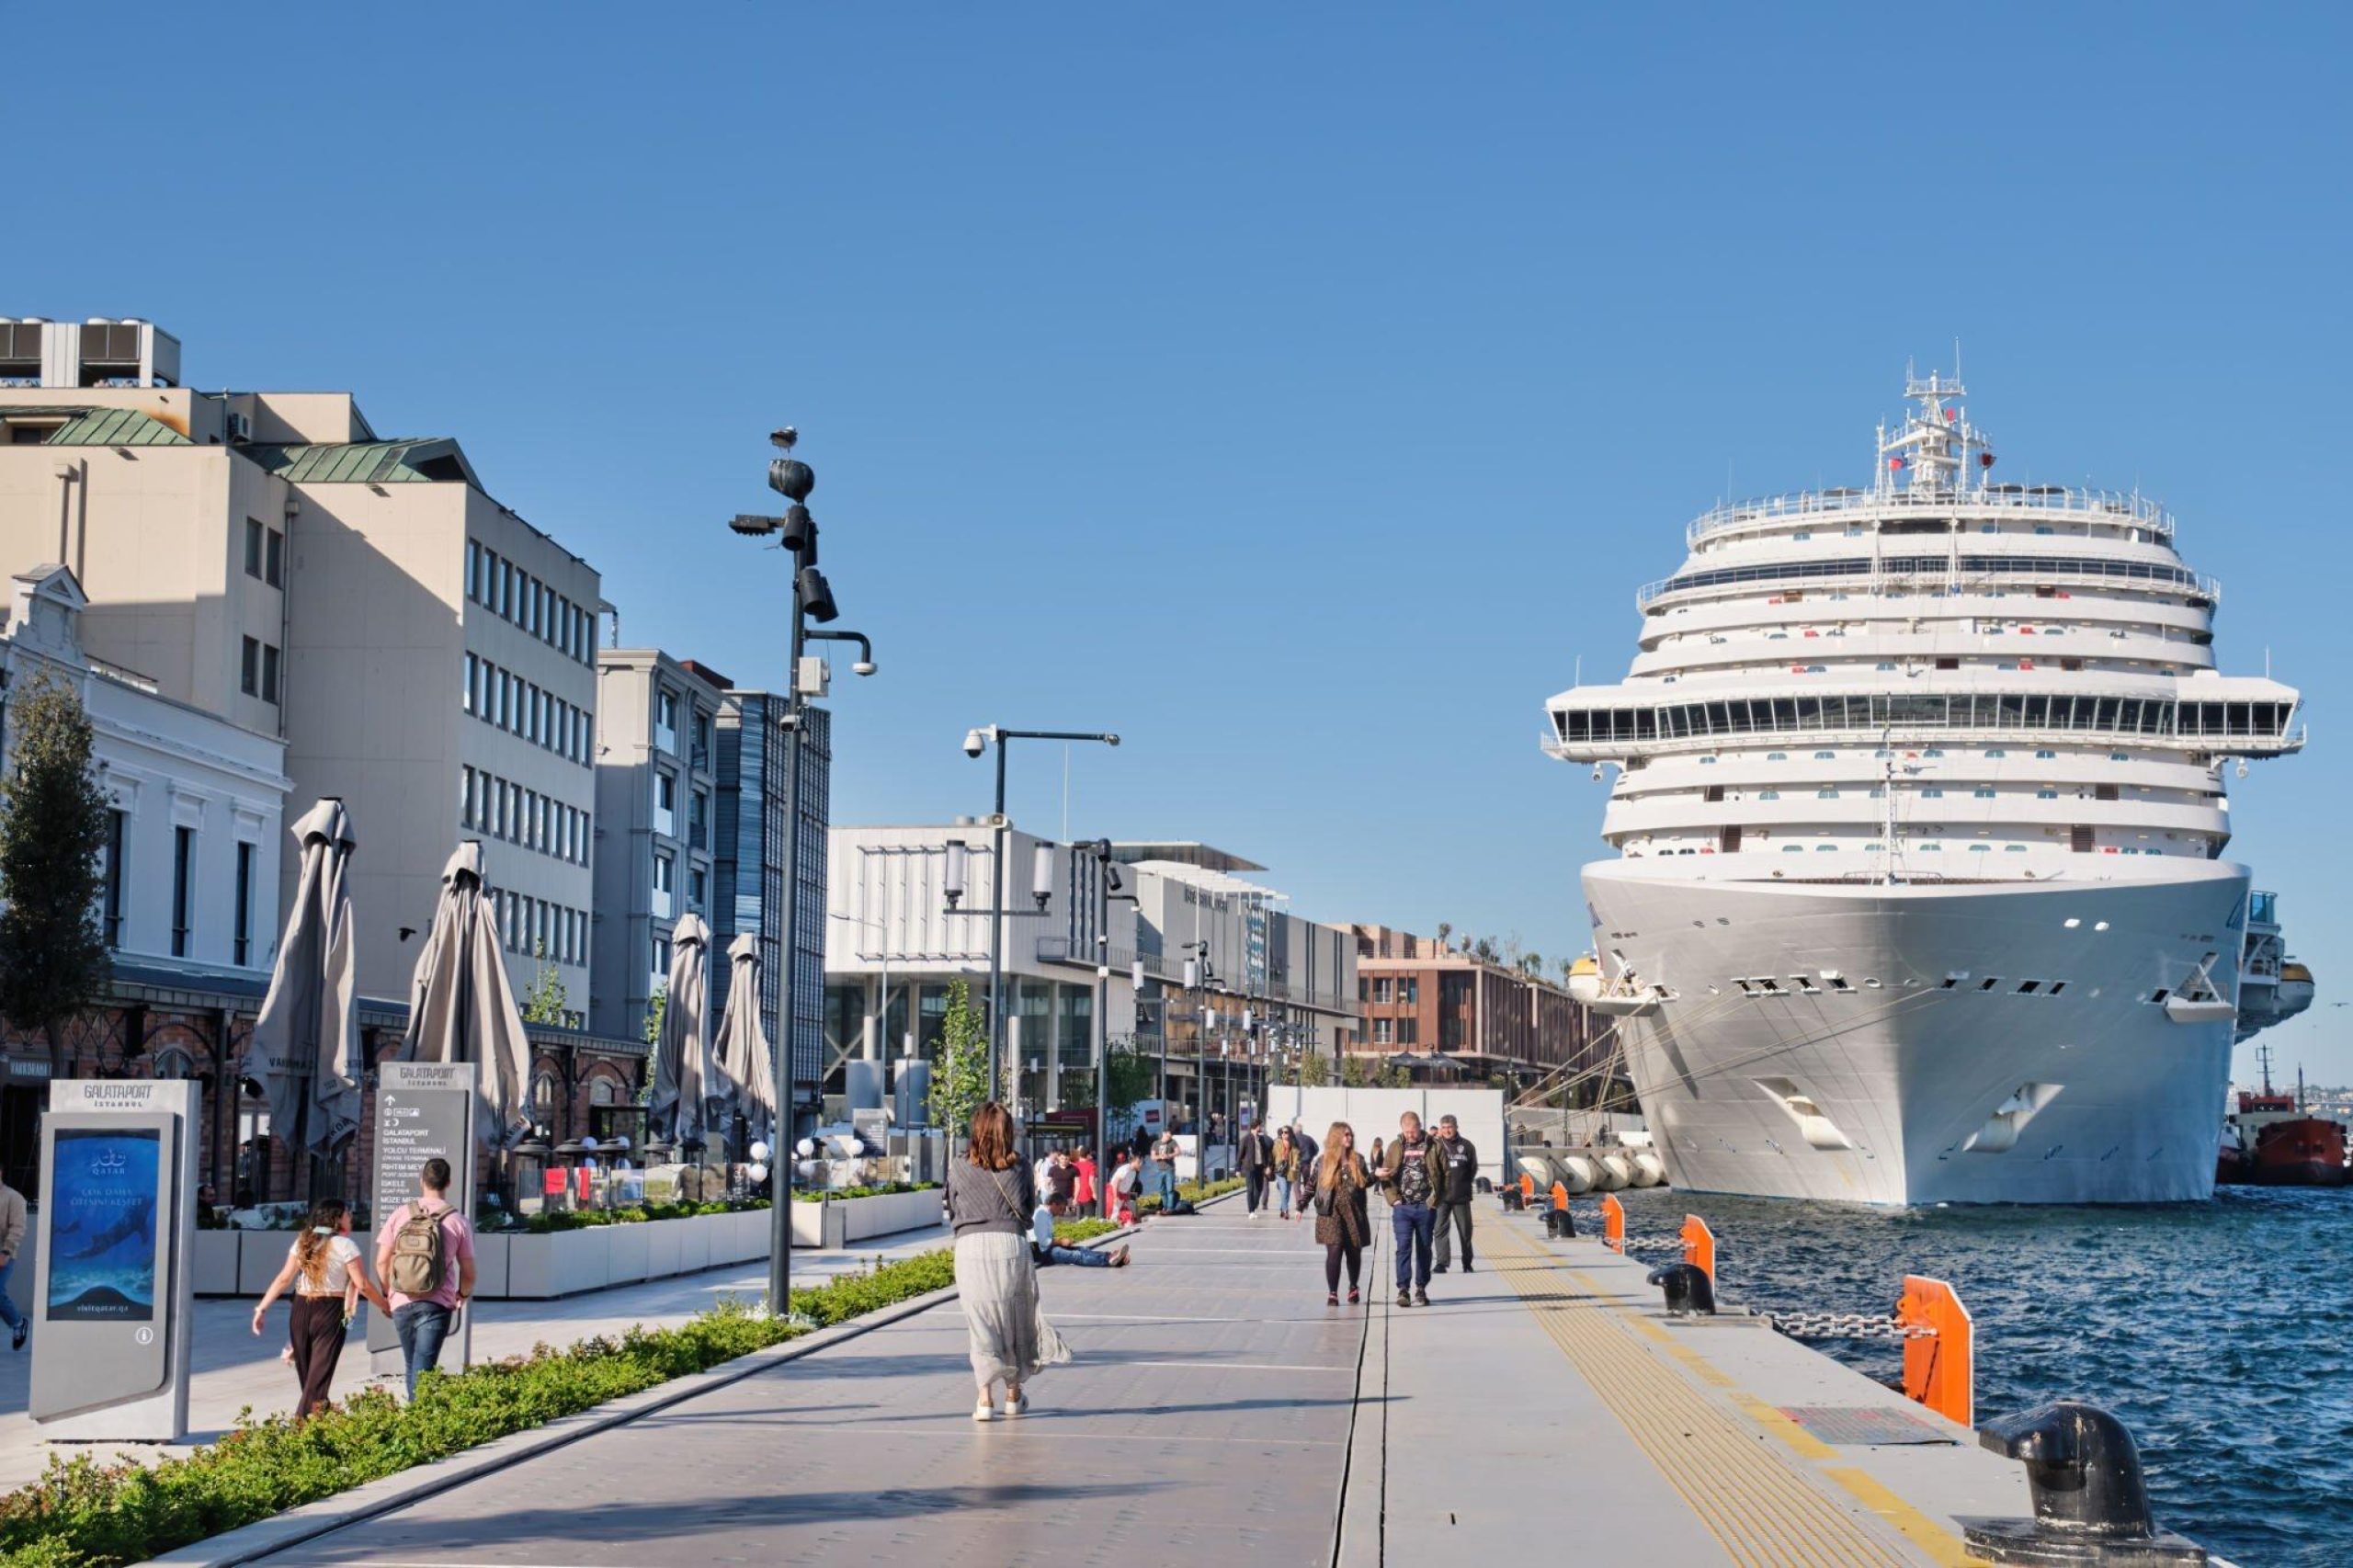 Take a cruise on the Bosphorus